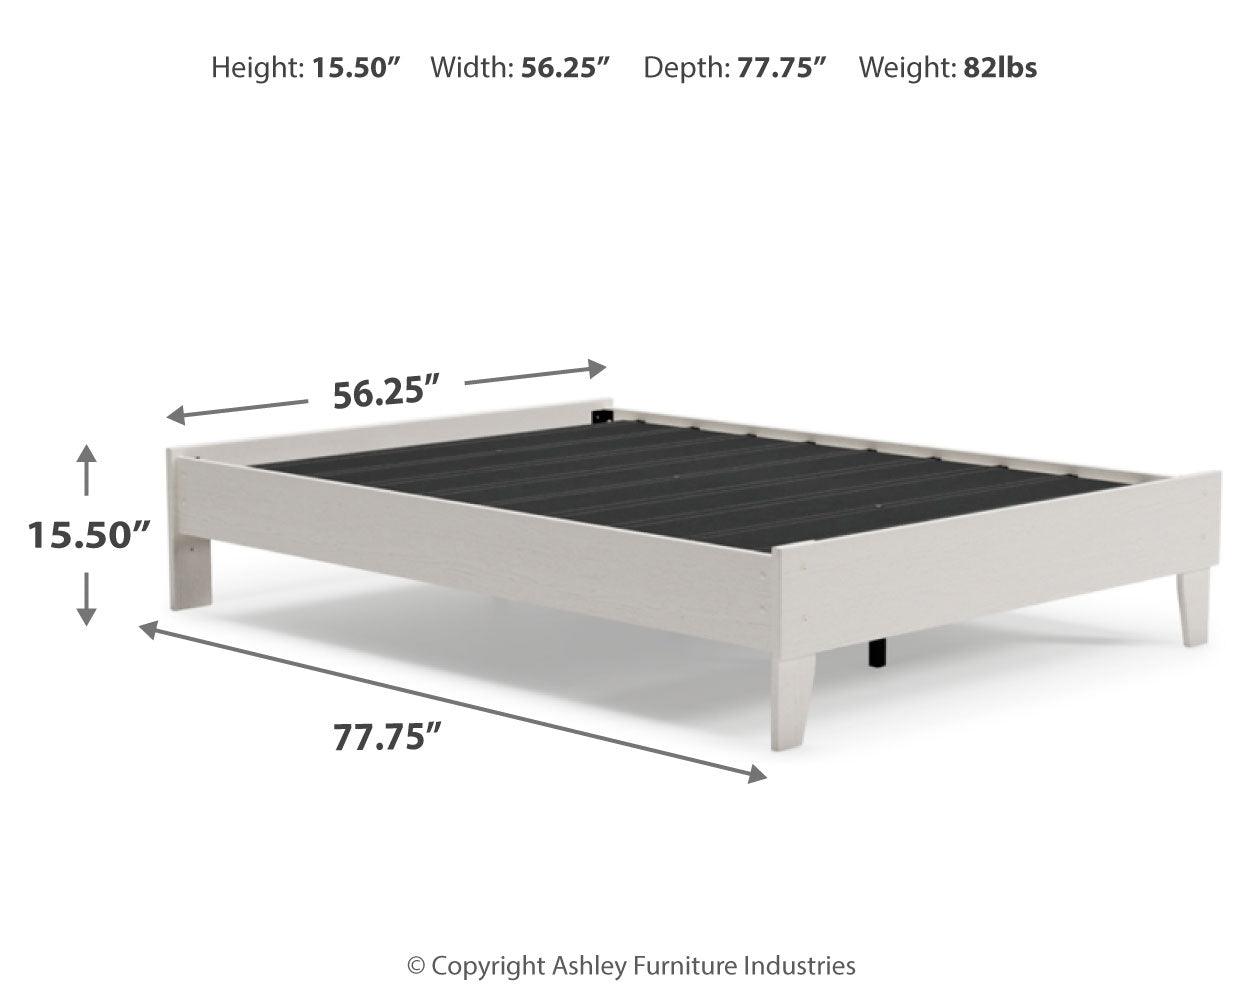 Vaibryn White Full Platform Bed - Ella Furniture